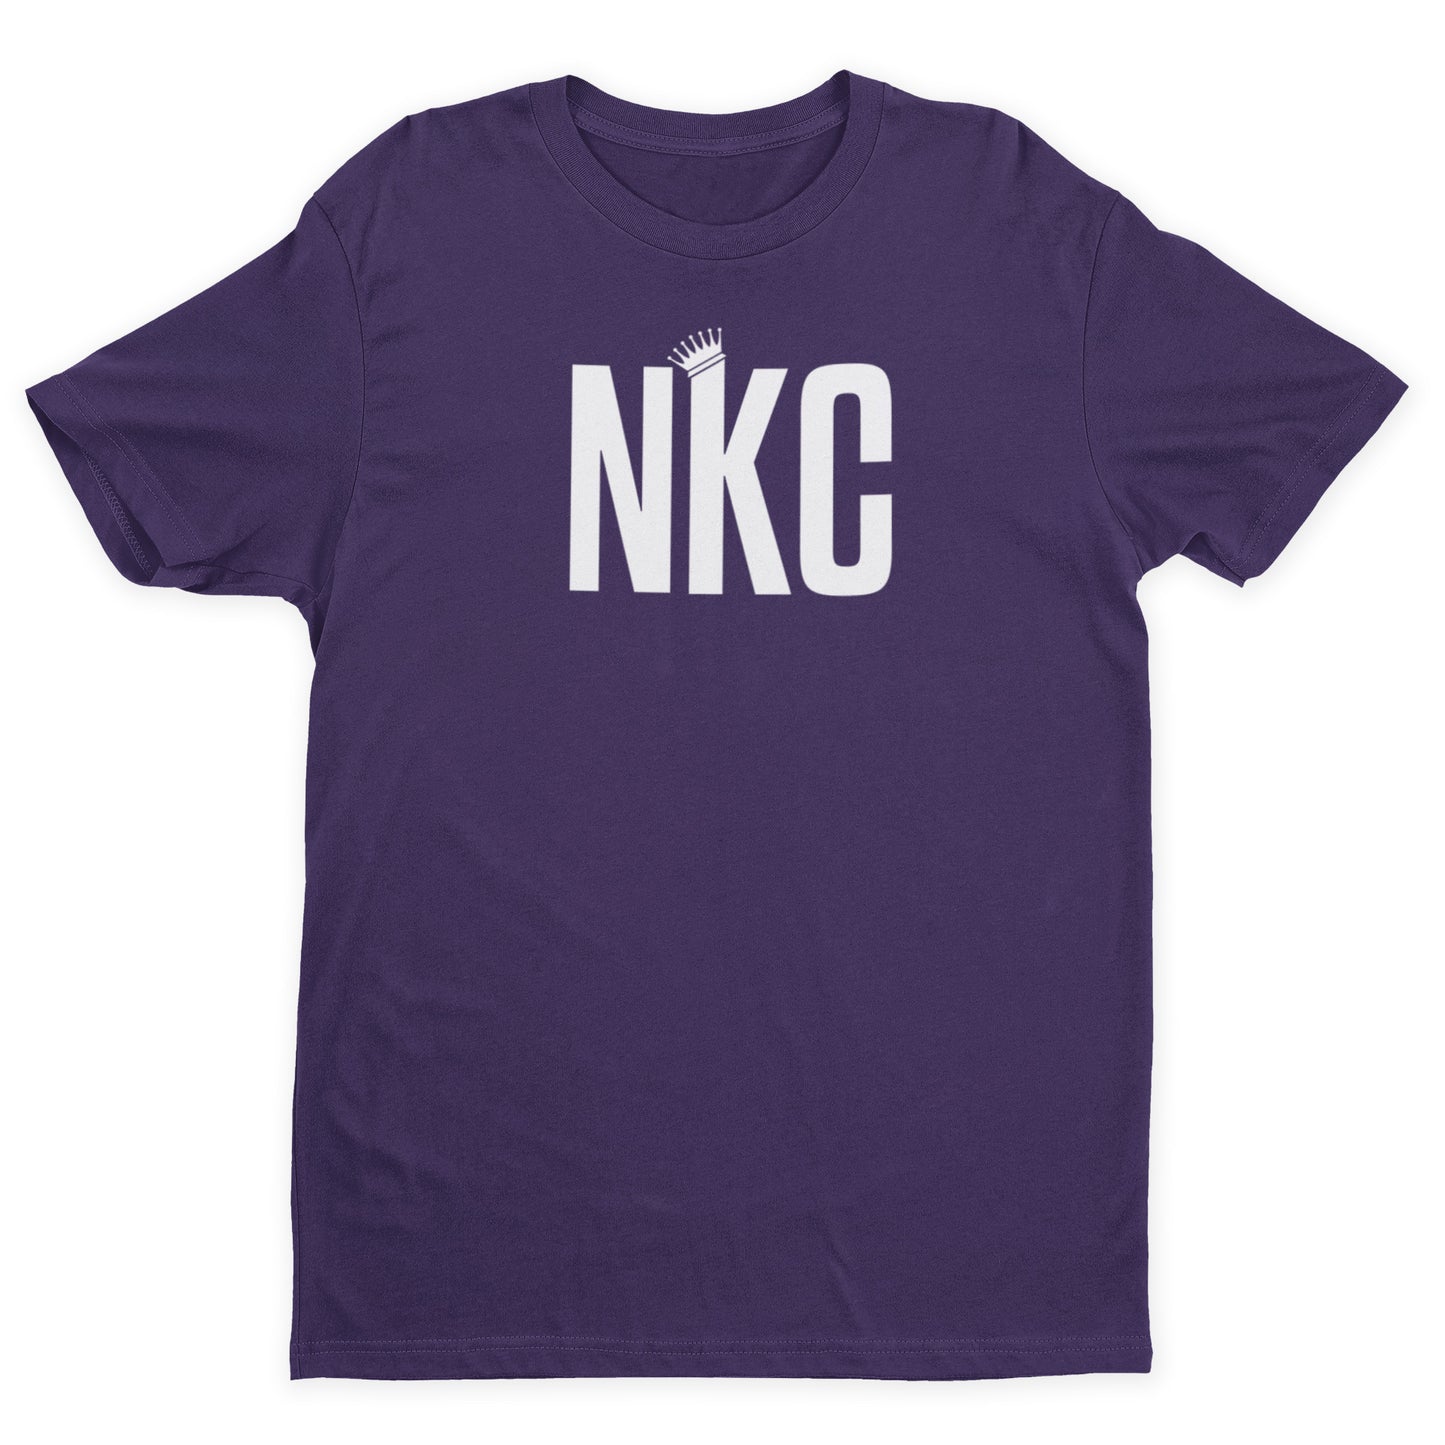 NKC Initial Logo T-Shirt - Purple / White